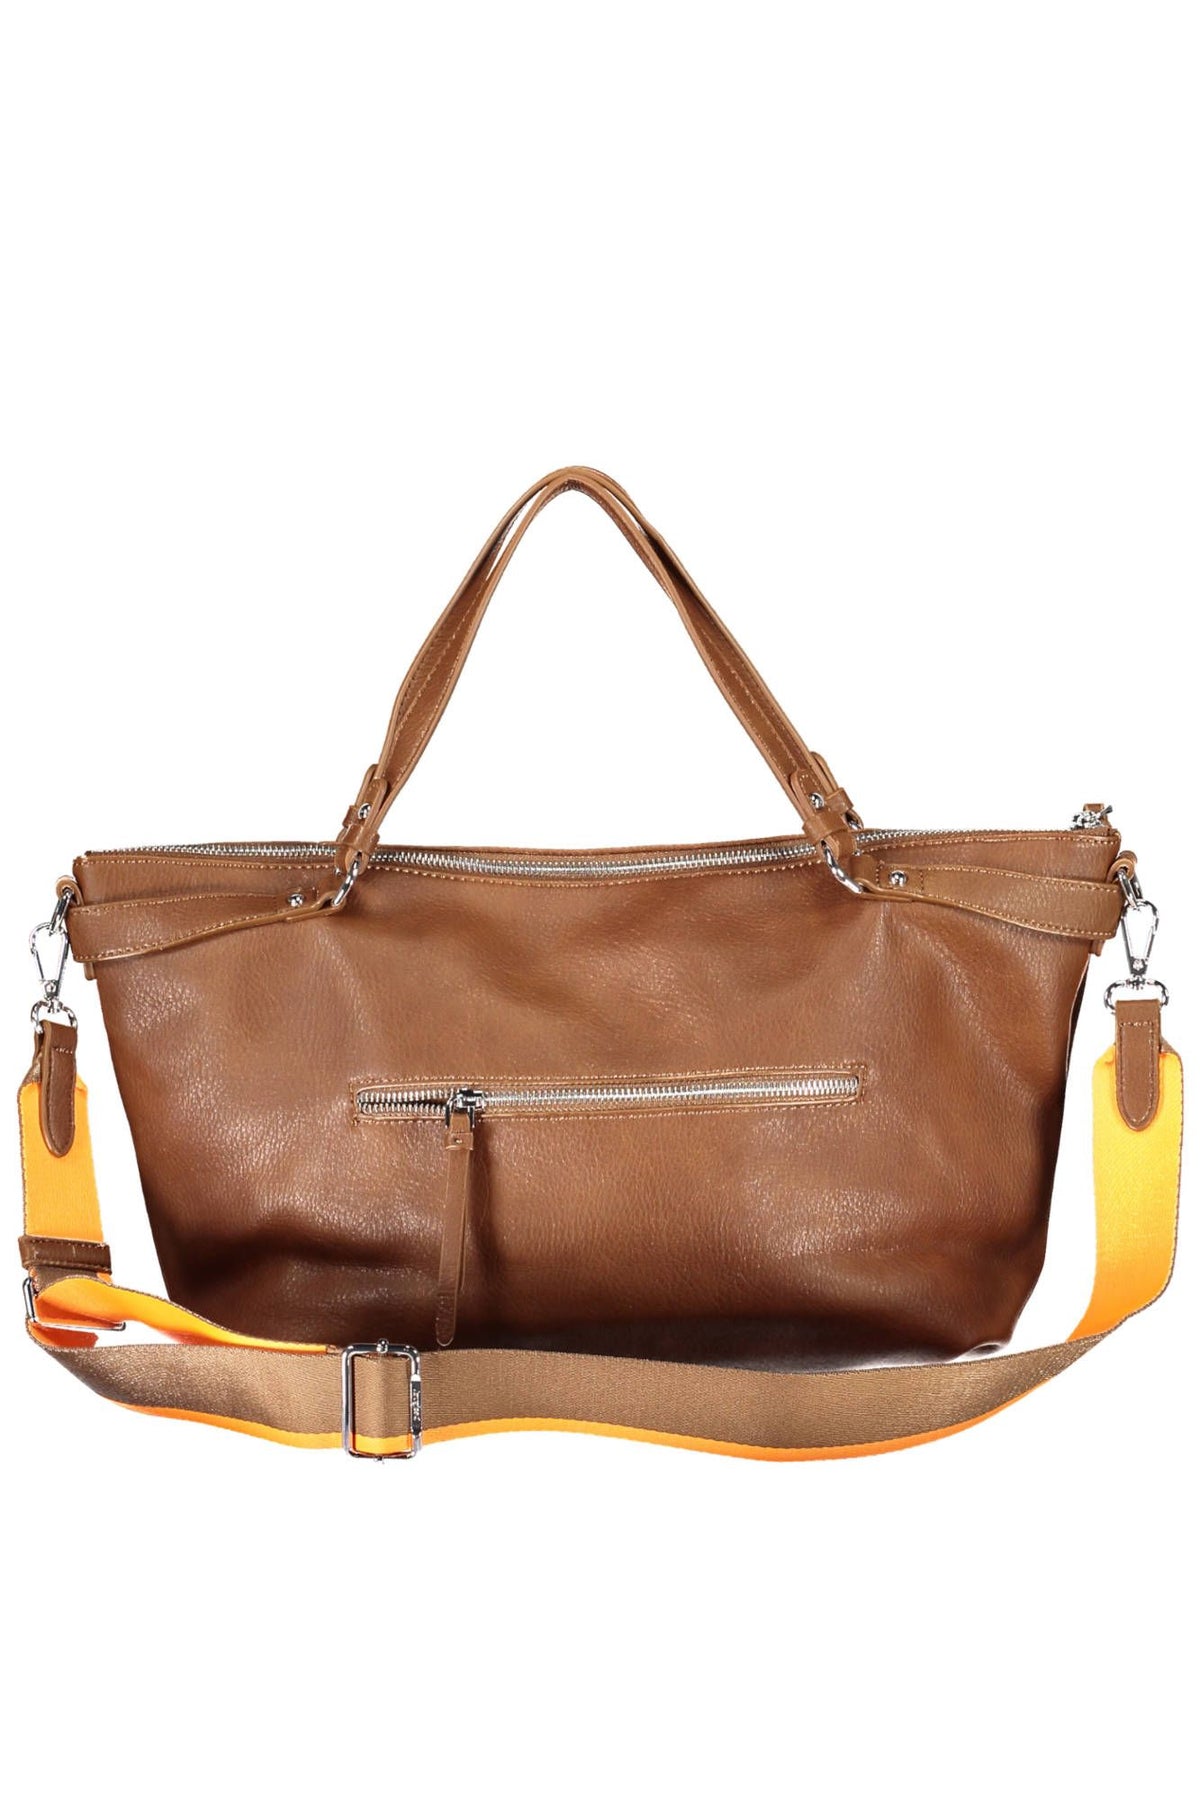 Desigual Chic Brown Polyurethane Handbag with Versatile Straps